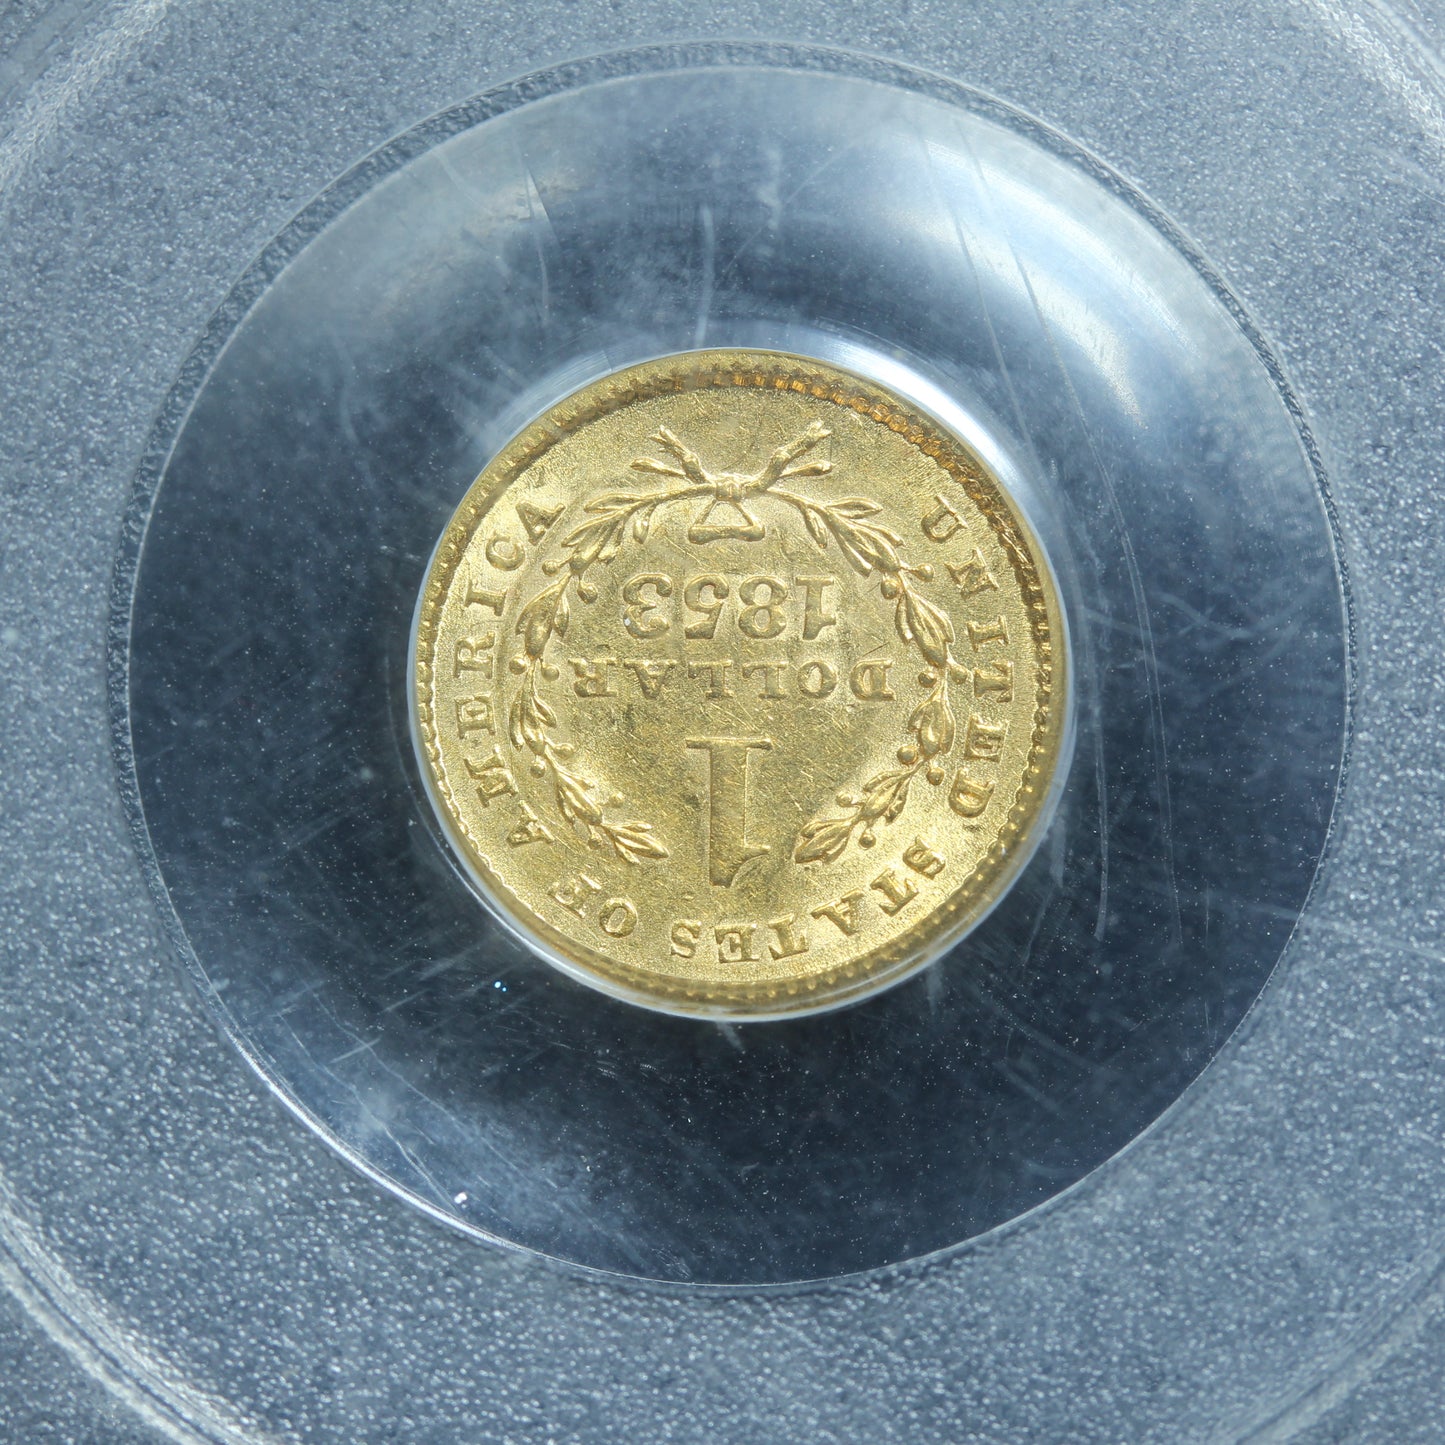 1853 US Gold $1 Dollar Liberty Head - PCGS AU55